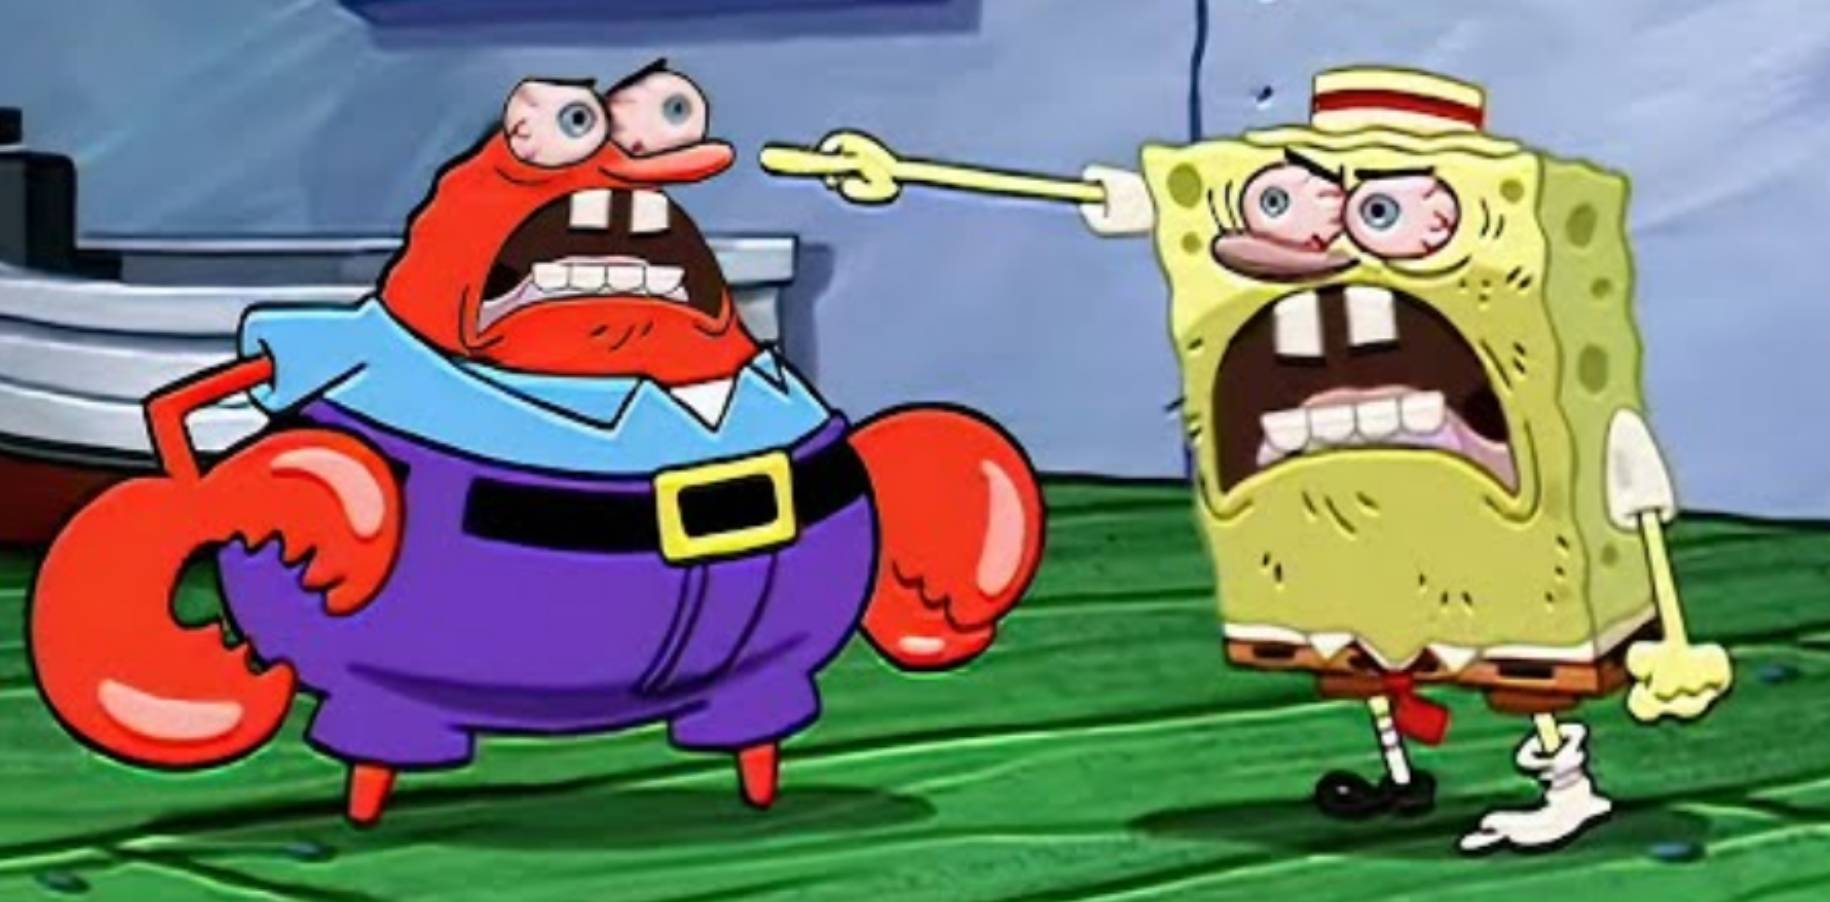 High Quality Angry mr krabs and angry spongebob Blank Meme Template